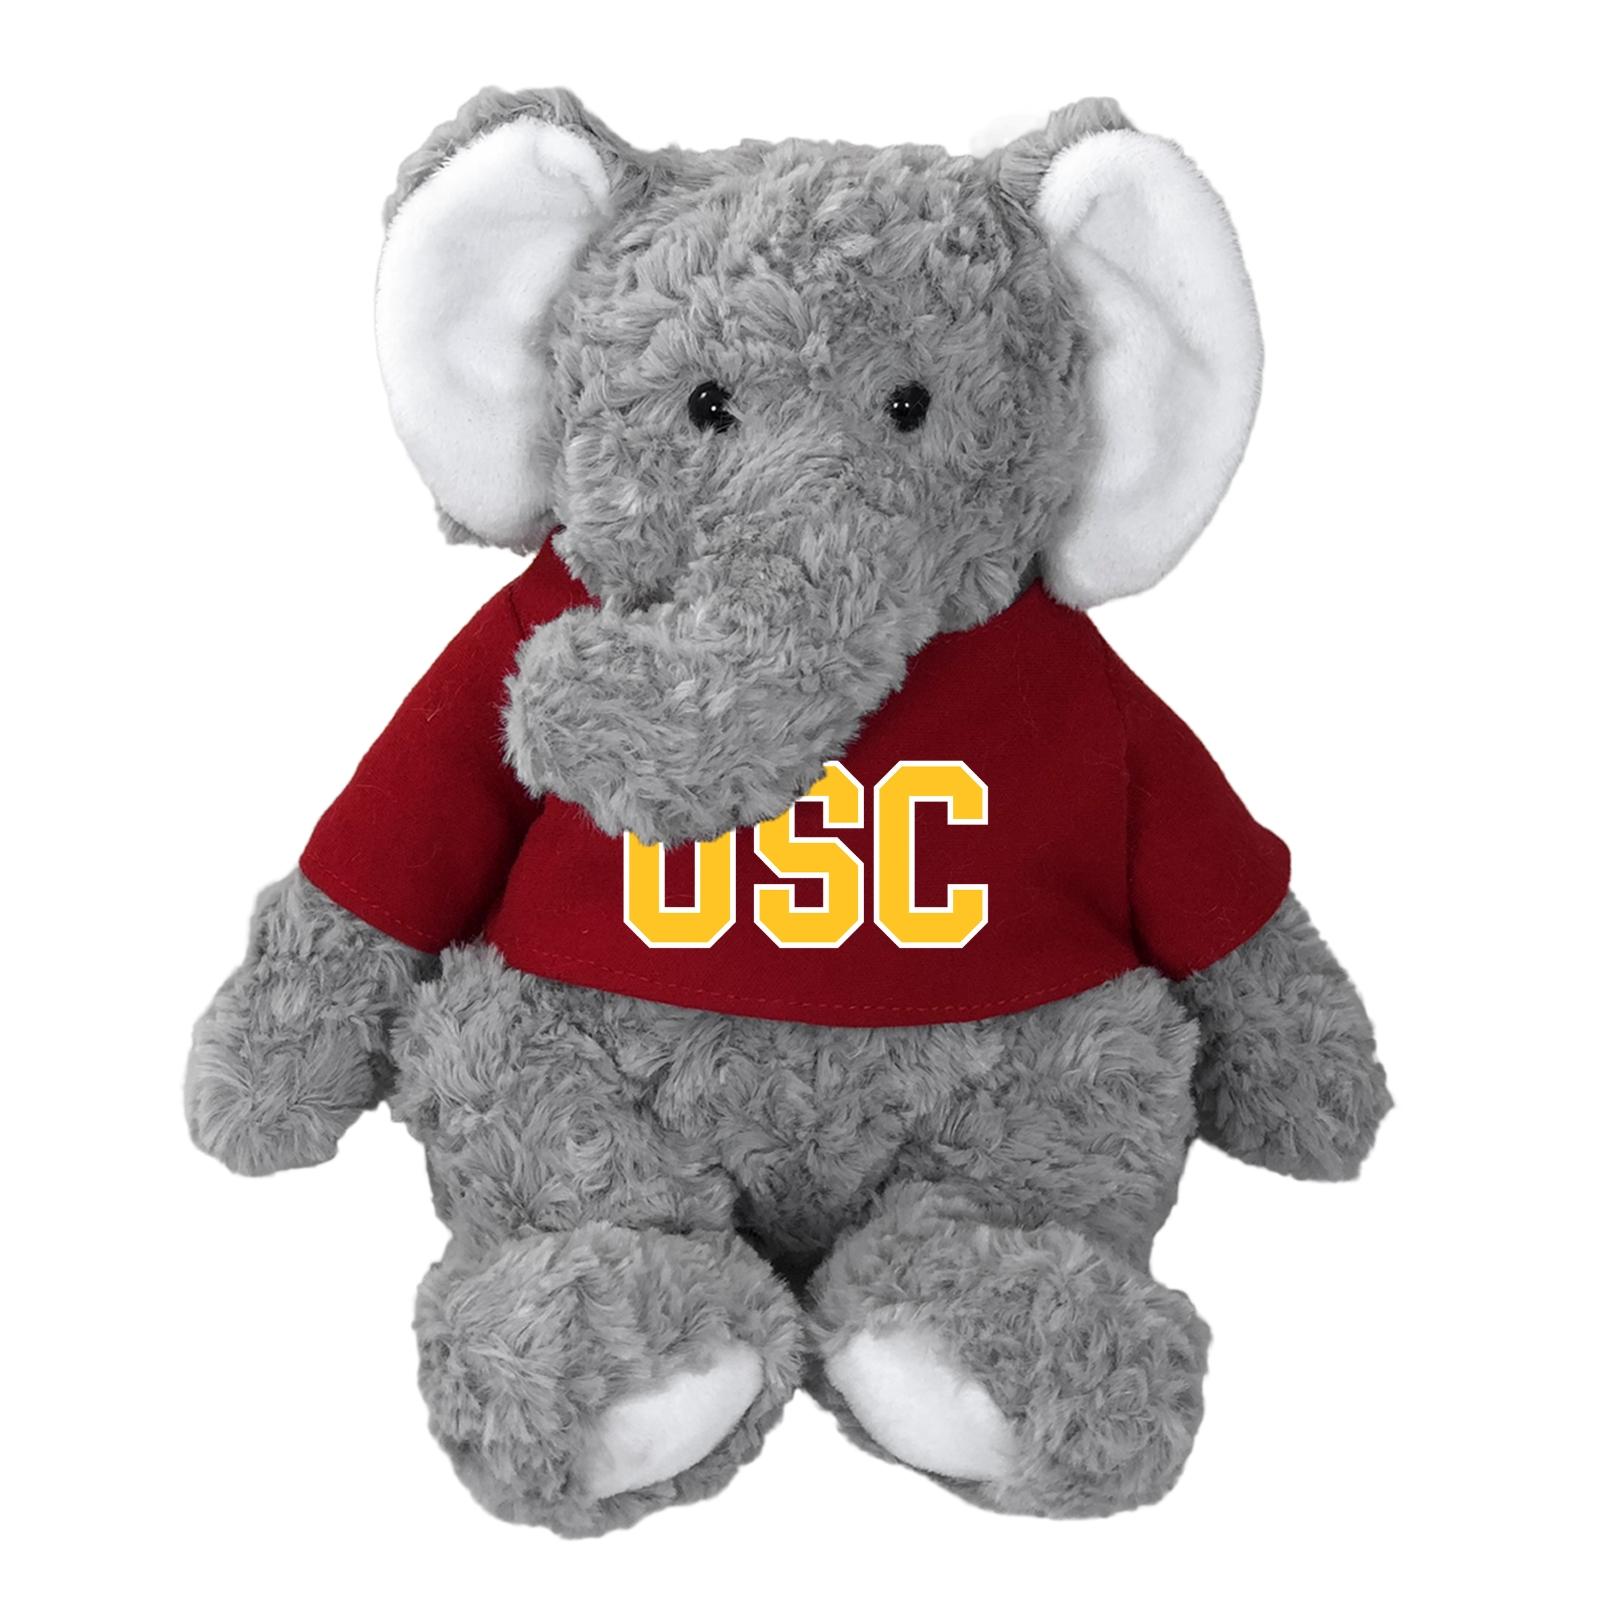 USC Elephant Cuddle Buddy Gray by Mascot Factory image01